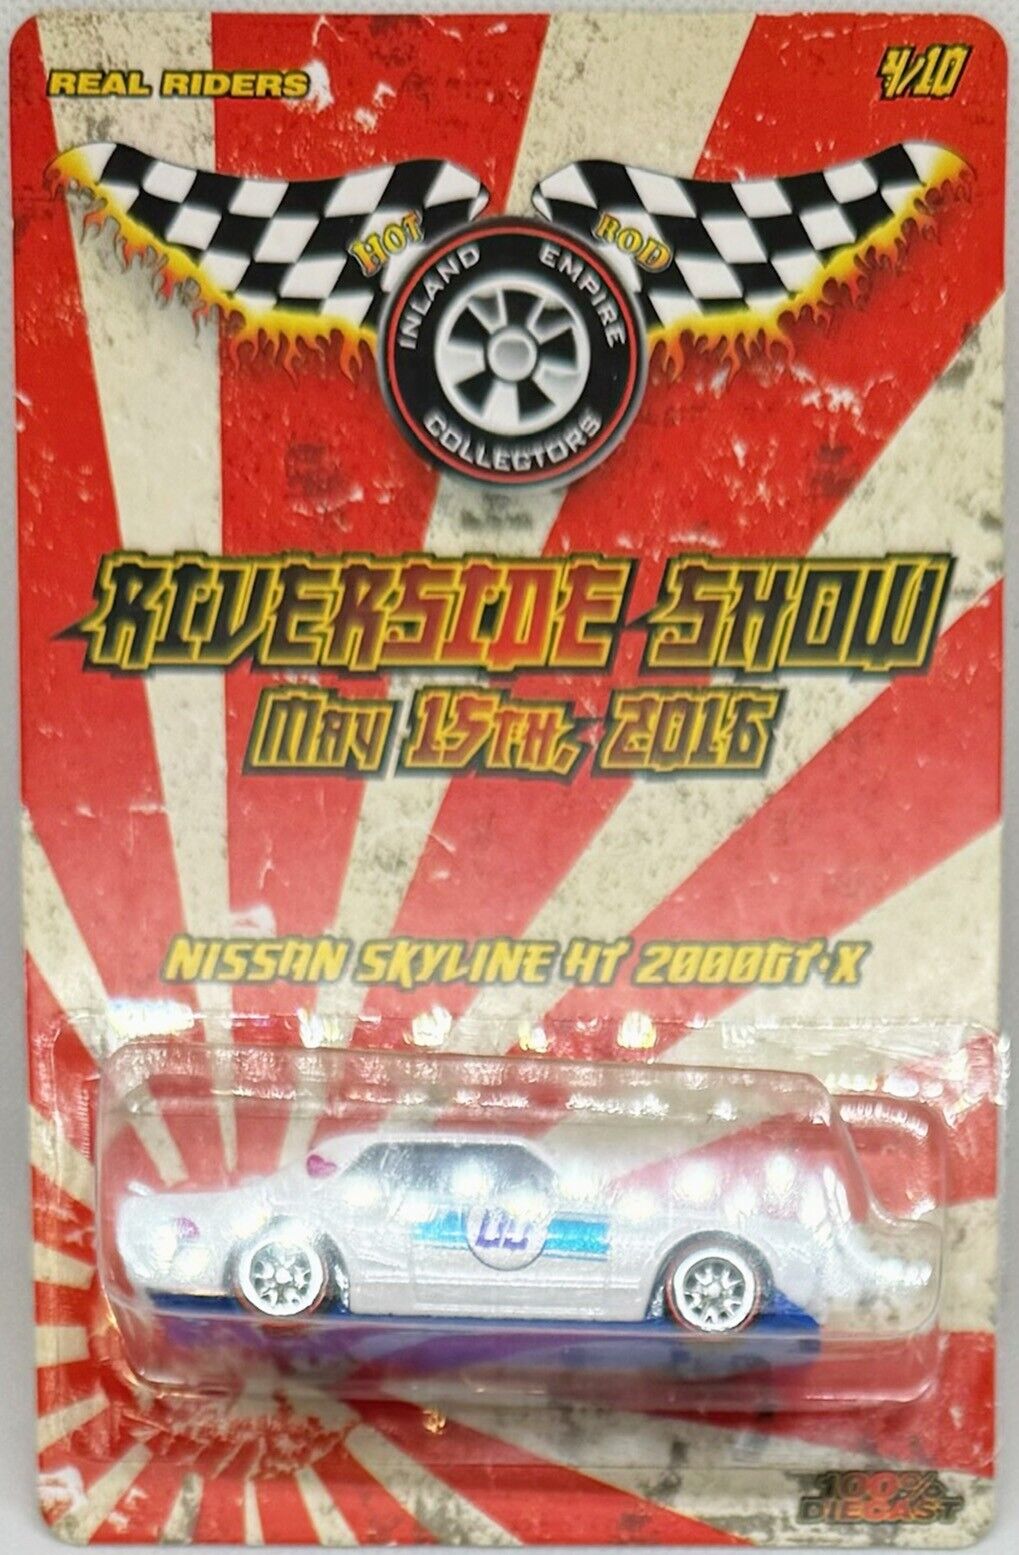 Nissan Skyline HT2000 GT-X Custom Hot Wheels Car 2016 Riverside Show Series w/RR